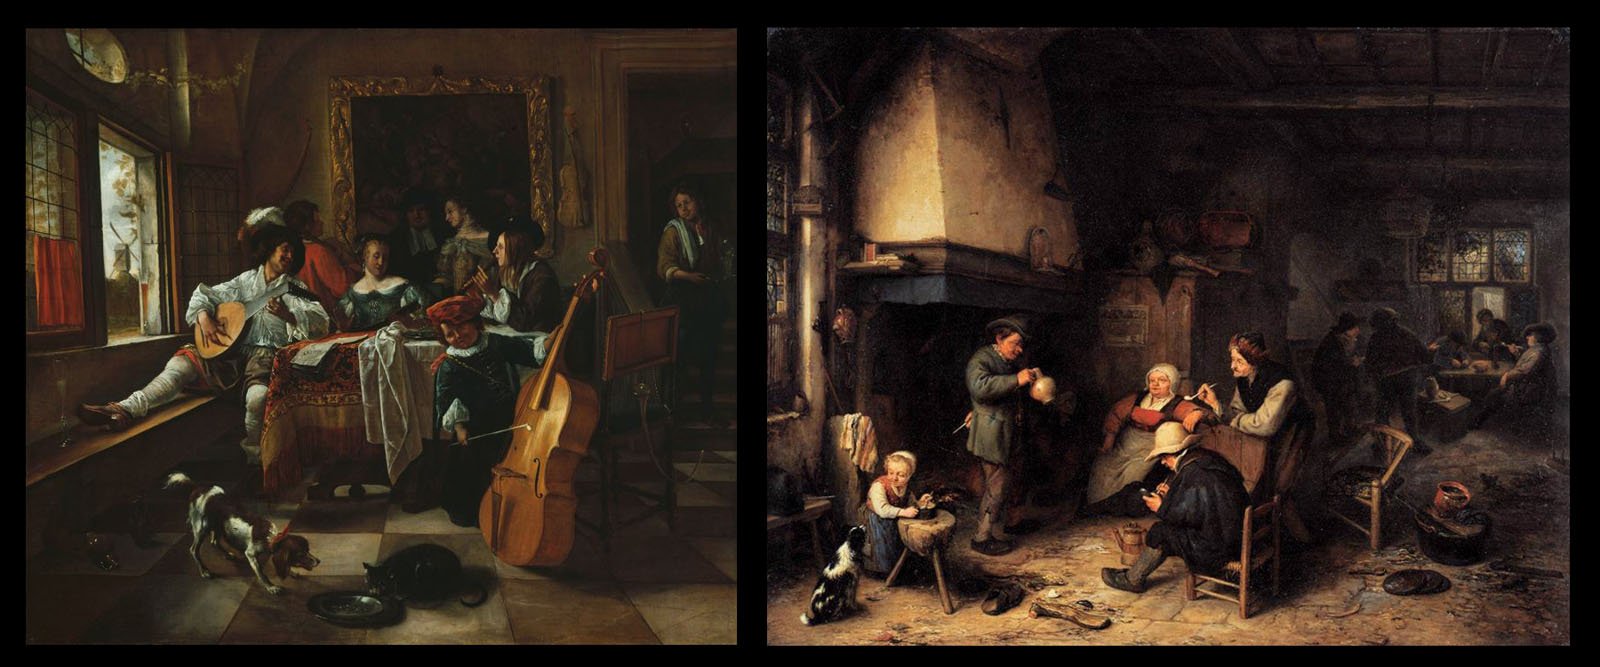 Jan Steen ‘The family concert’ 1666 (left) Adriaen van Ostade  ‘Peasants in an Interior’ 1661 (right)